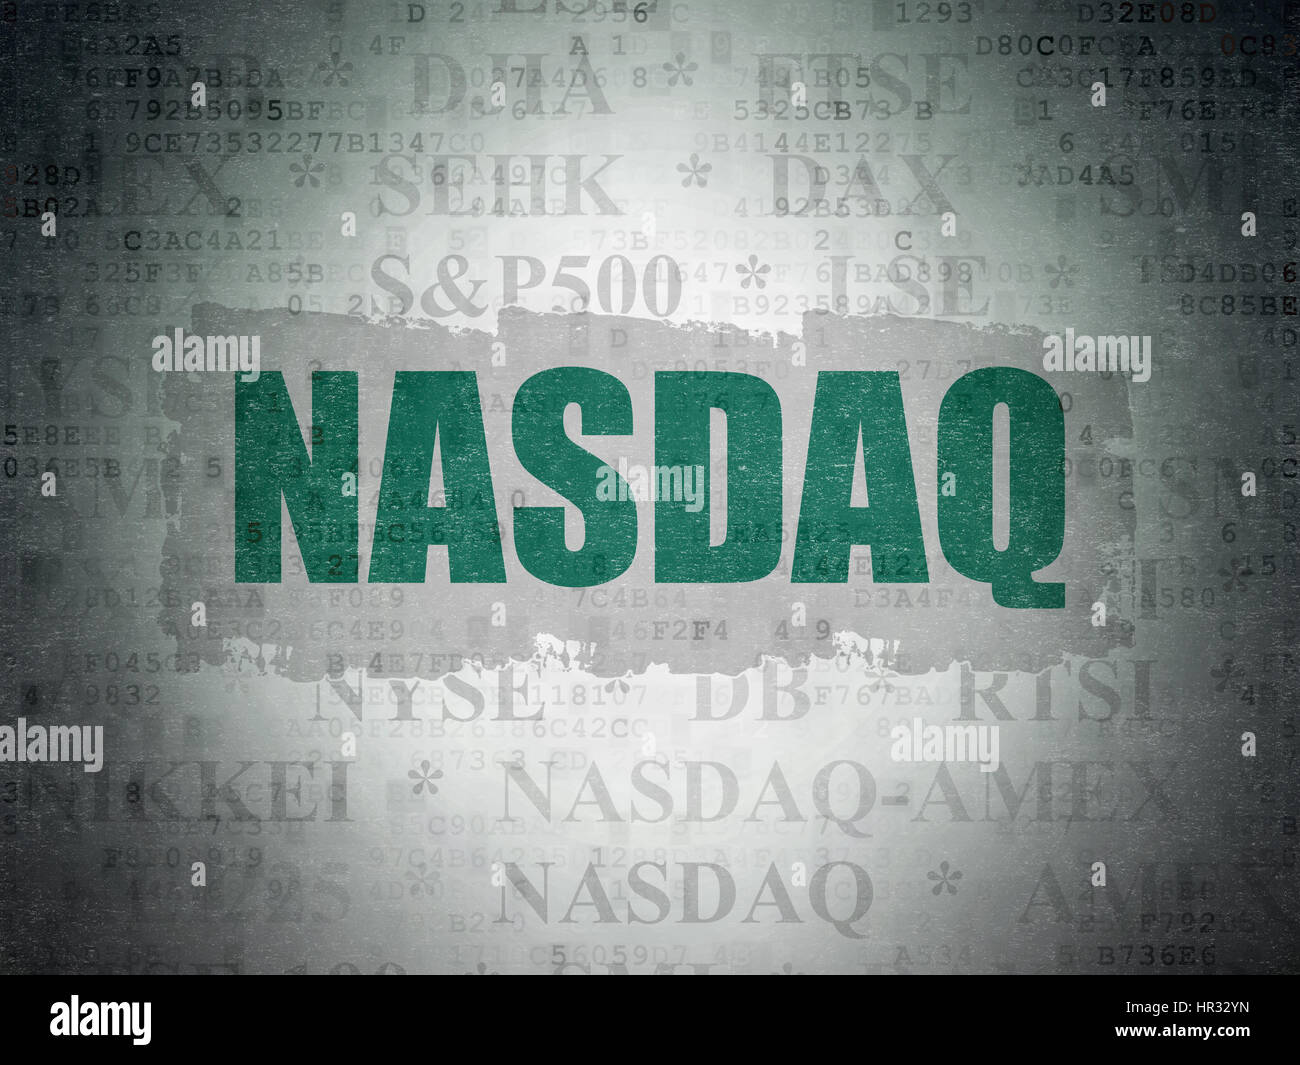 Stock market indexes concept: NASDAQ on Digital Data Paper background Stock Photo